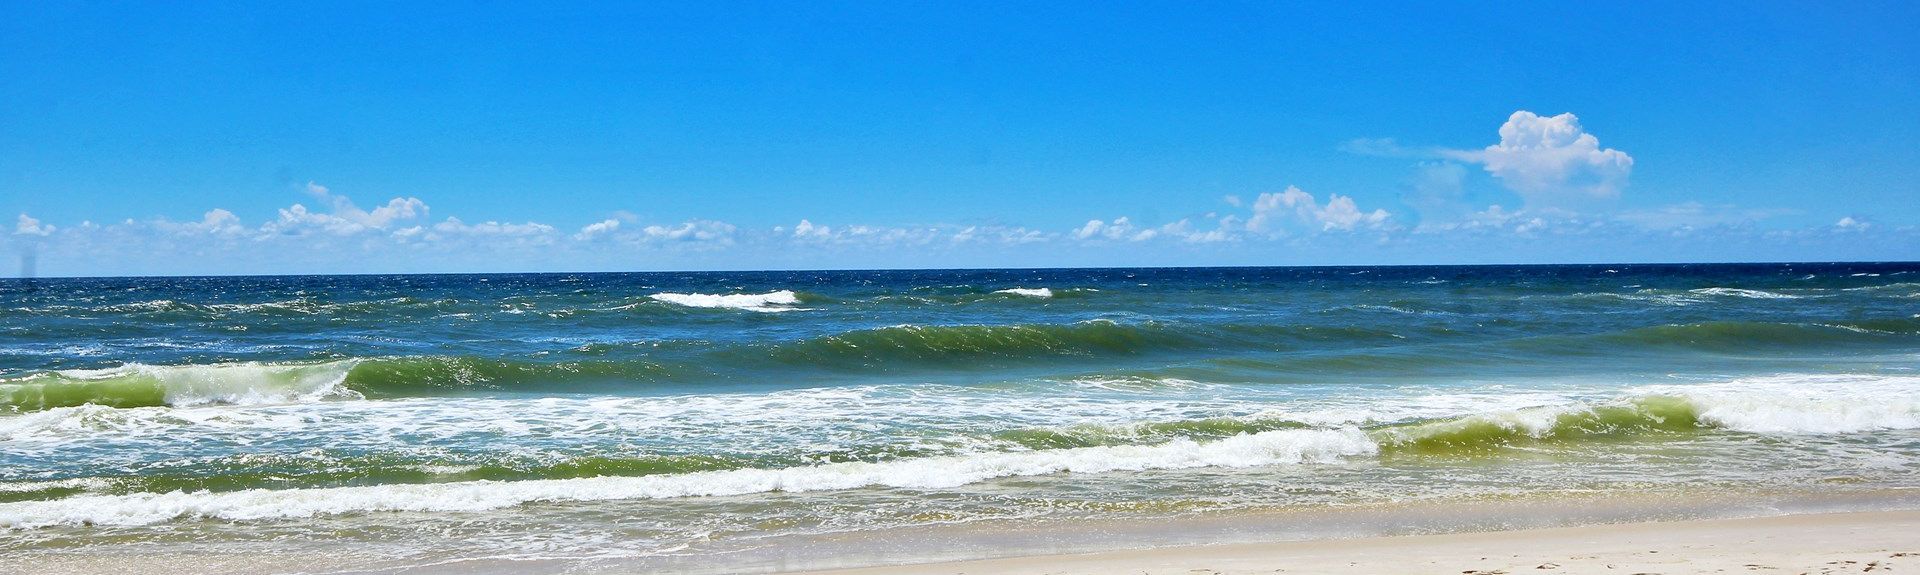 Island Shores, Gulf Shores Vacation Rentals: condo and apartment rentals & more